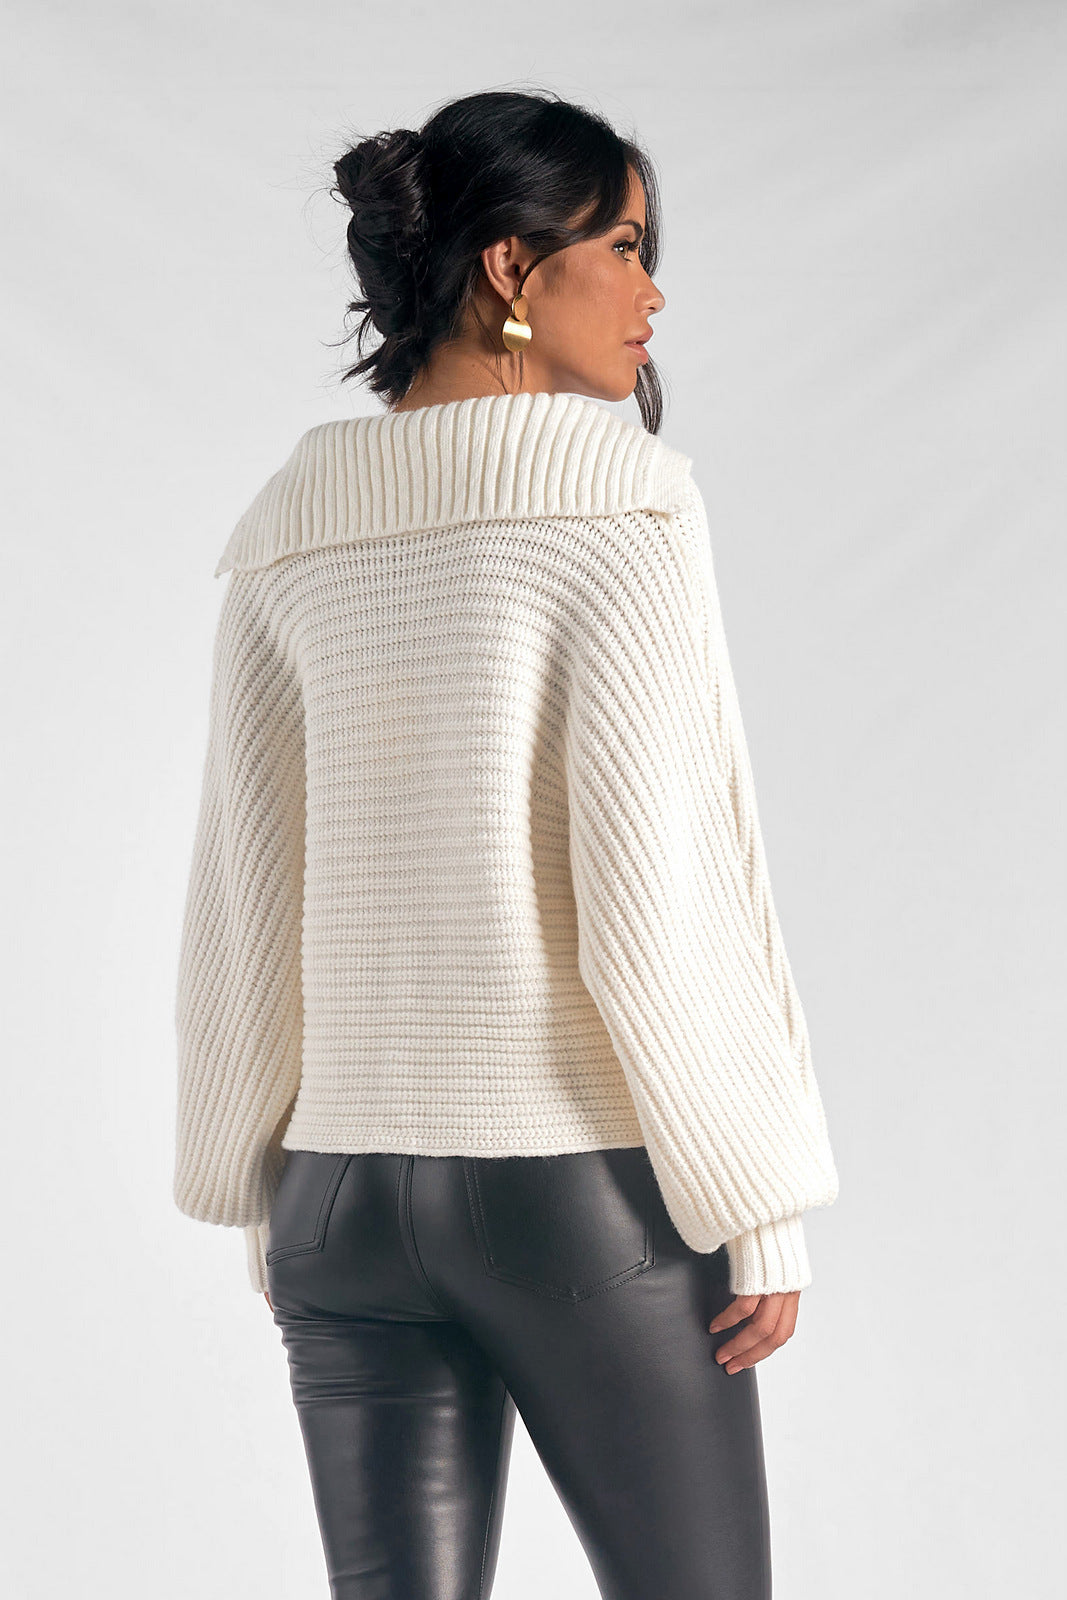 Sierra Sweater - Shop Elan